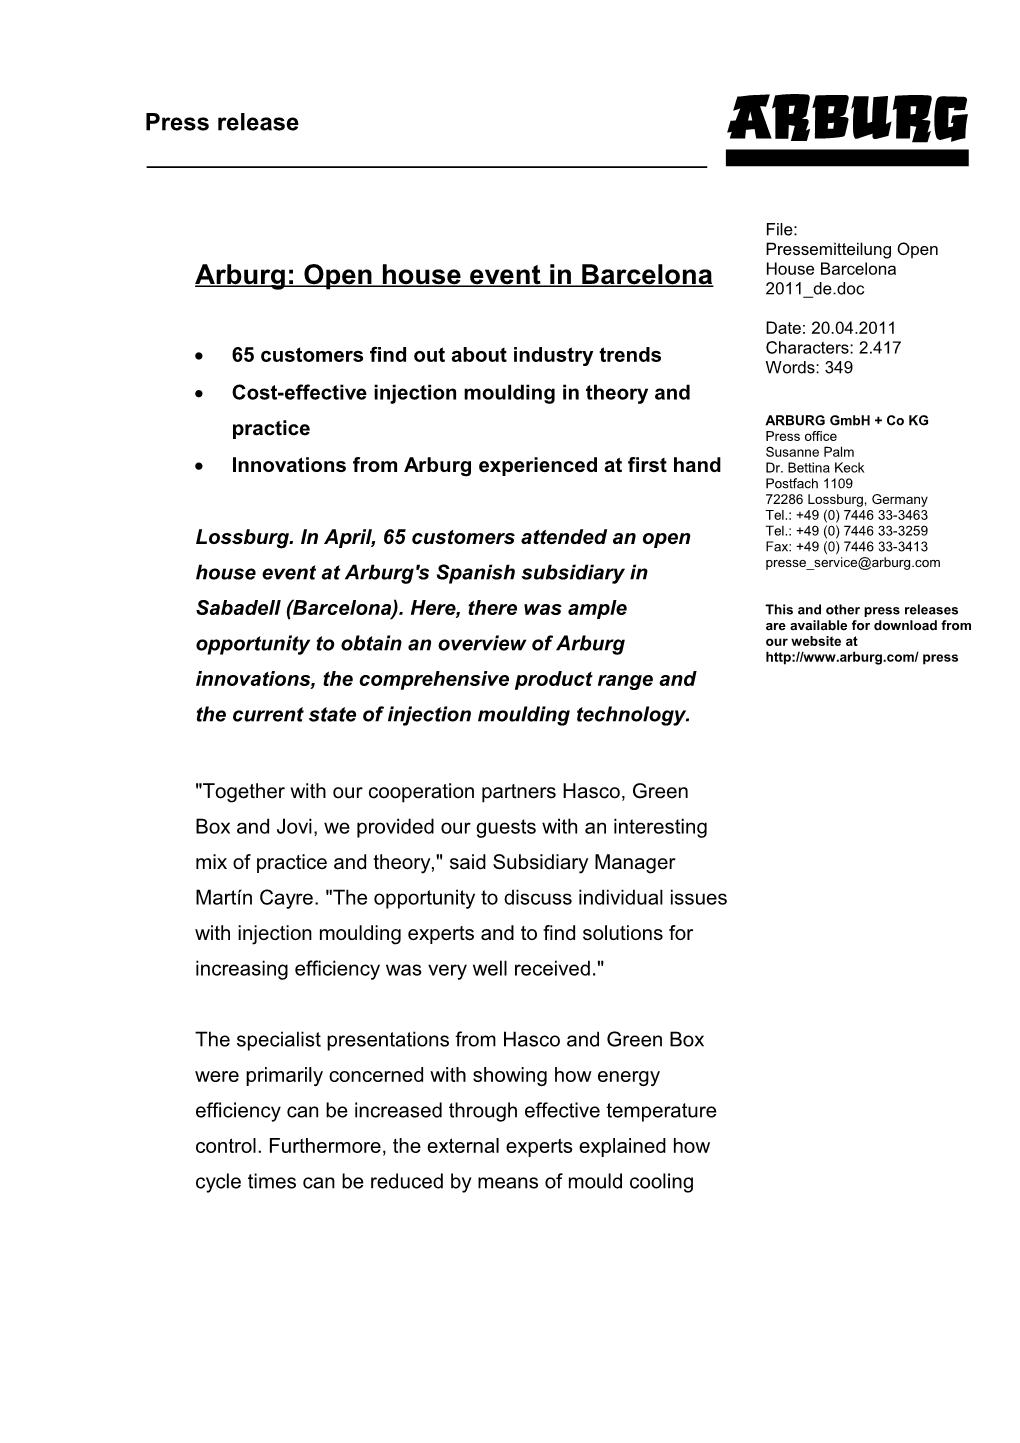 Arburg:Open House Event in Barcelona